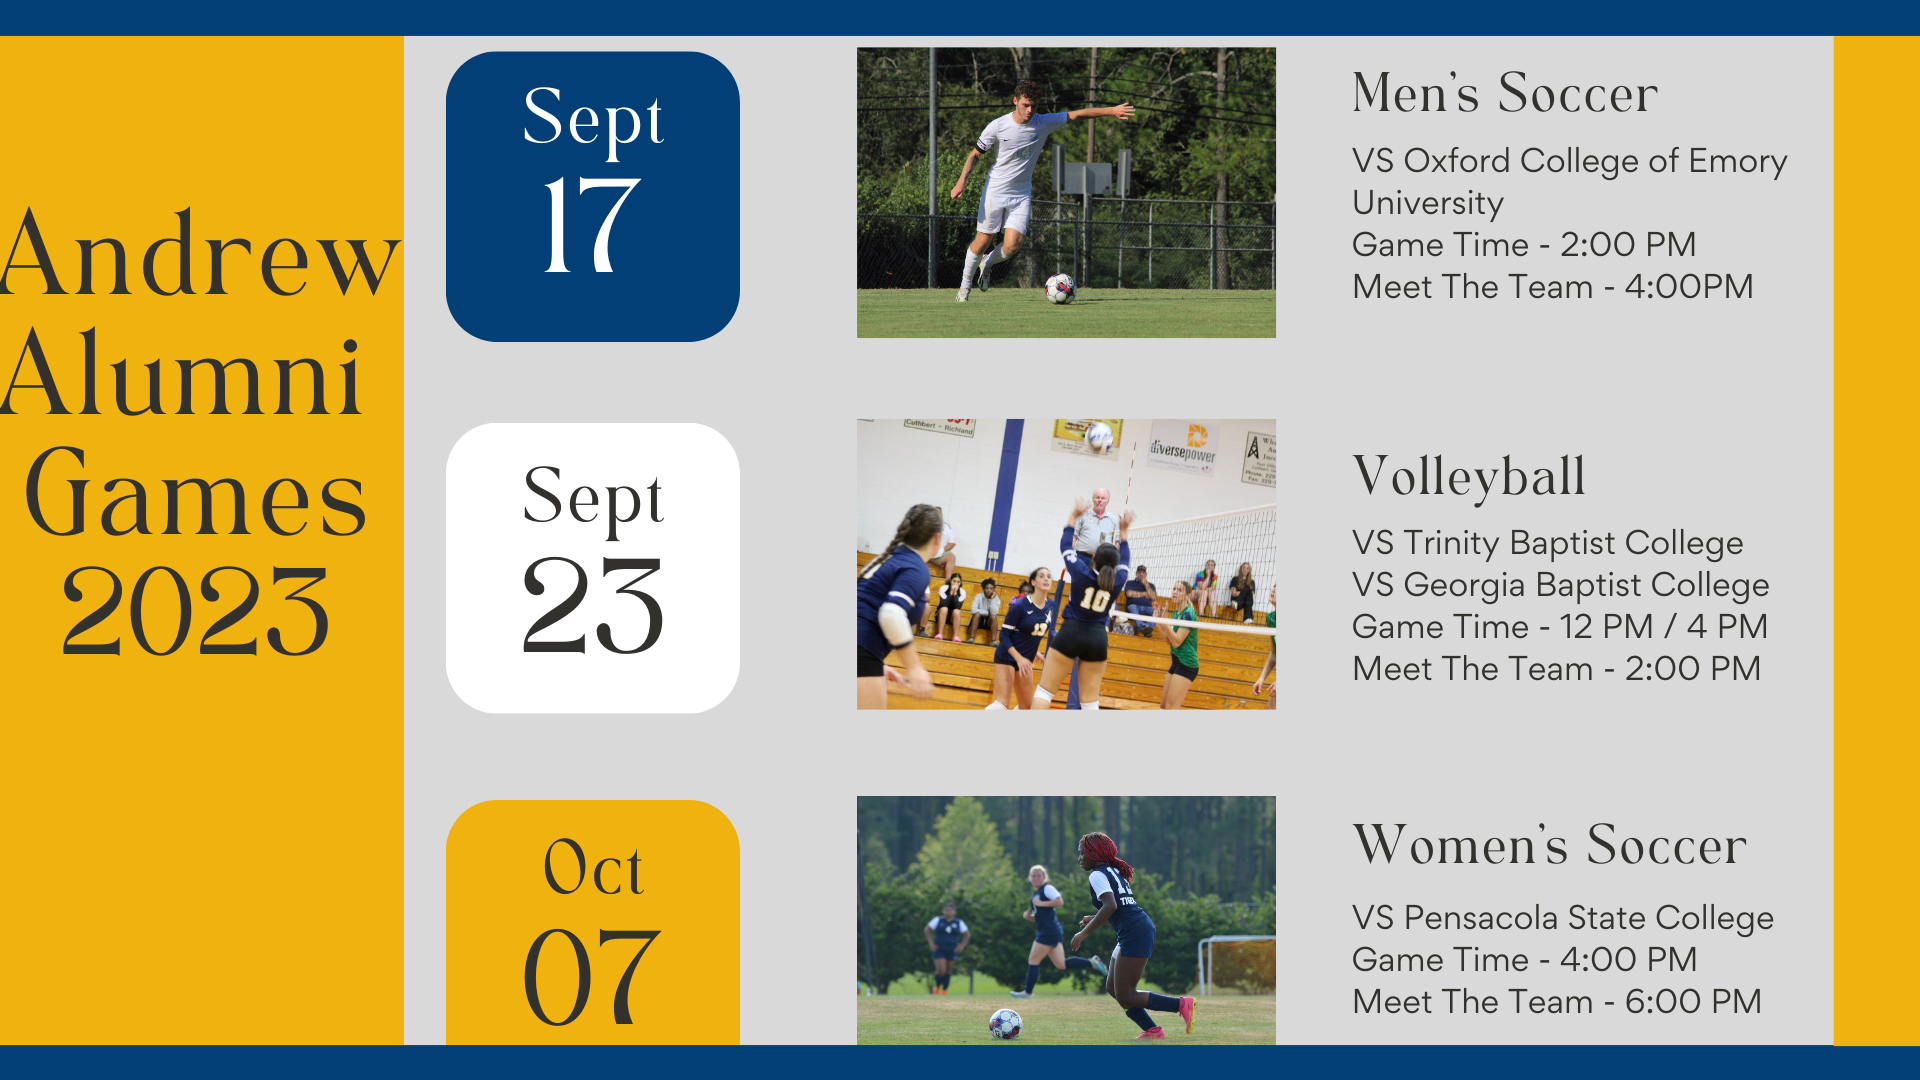 Andrew College Alumni Games for 2023 Schedule
Men's Soccer September 17, 2023
Women's Volleyball September 23, 2023
Women's Soccer October 7, 2023